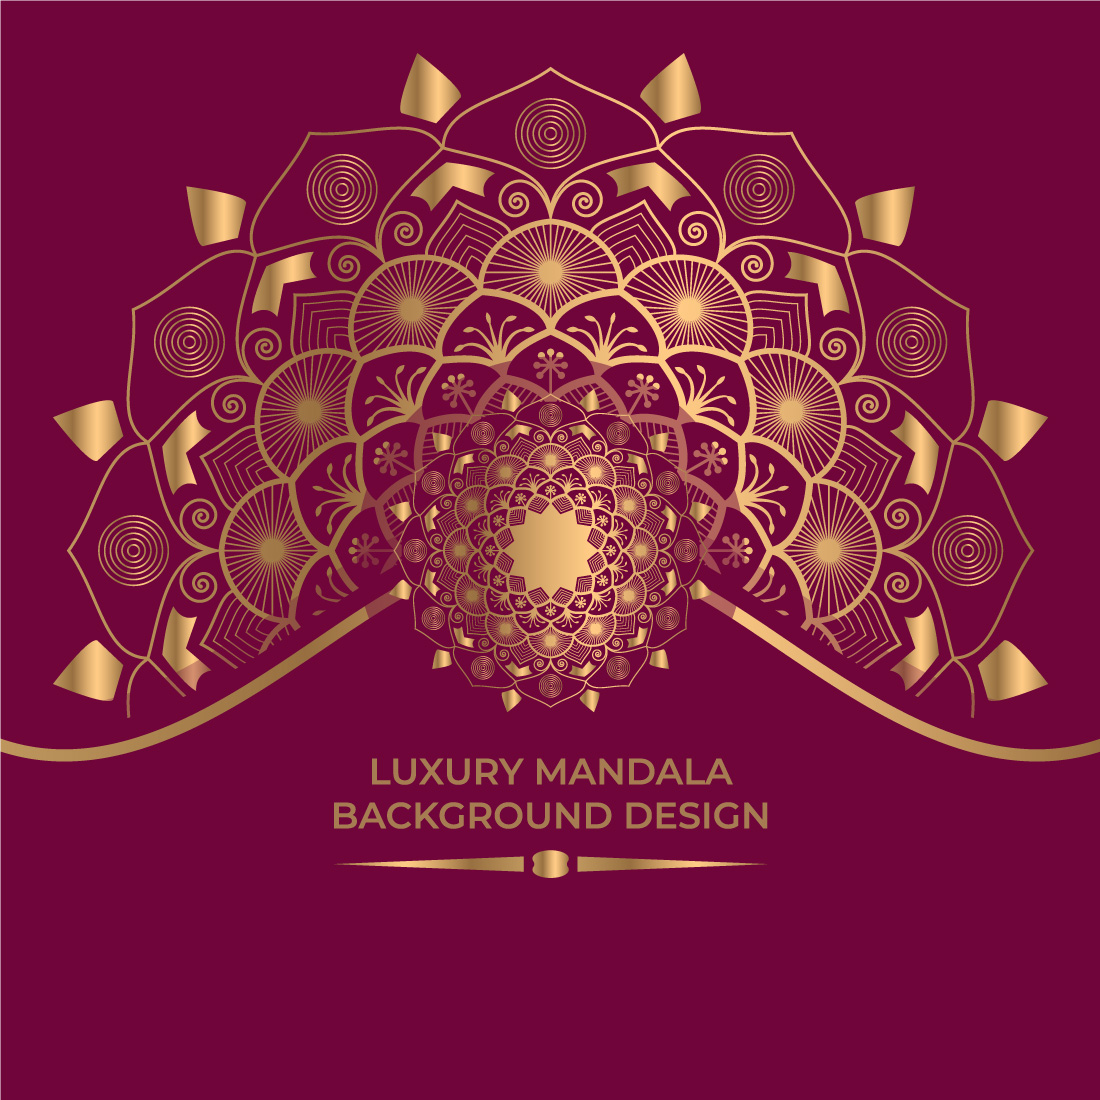 02 Luxury Mandala Background Design preview image.